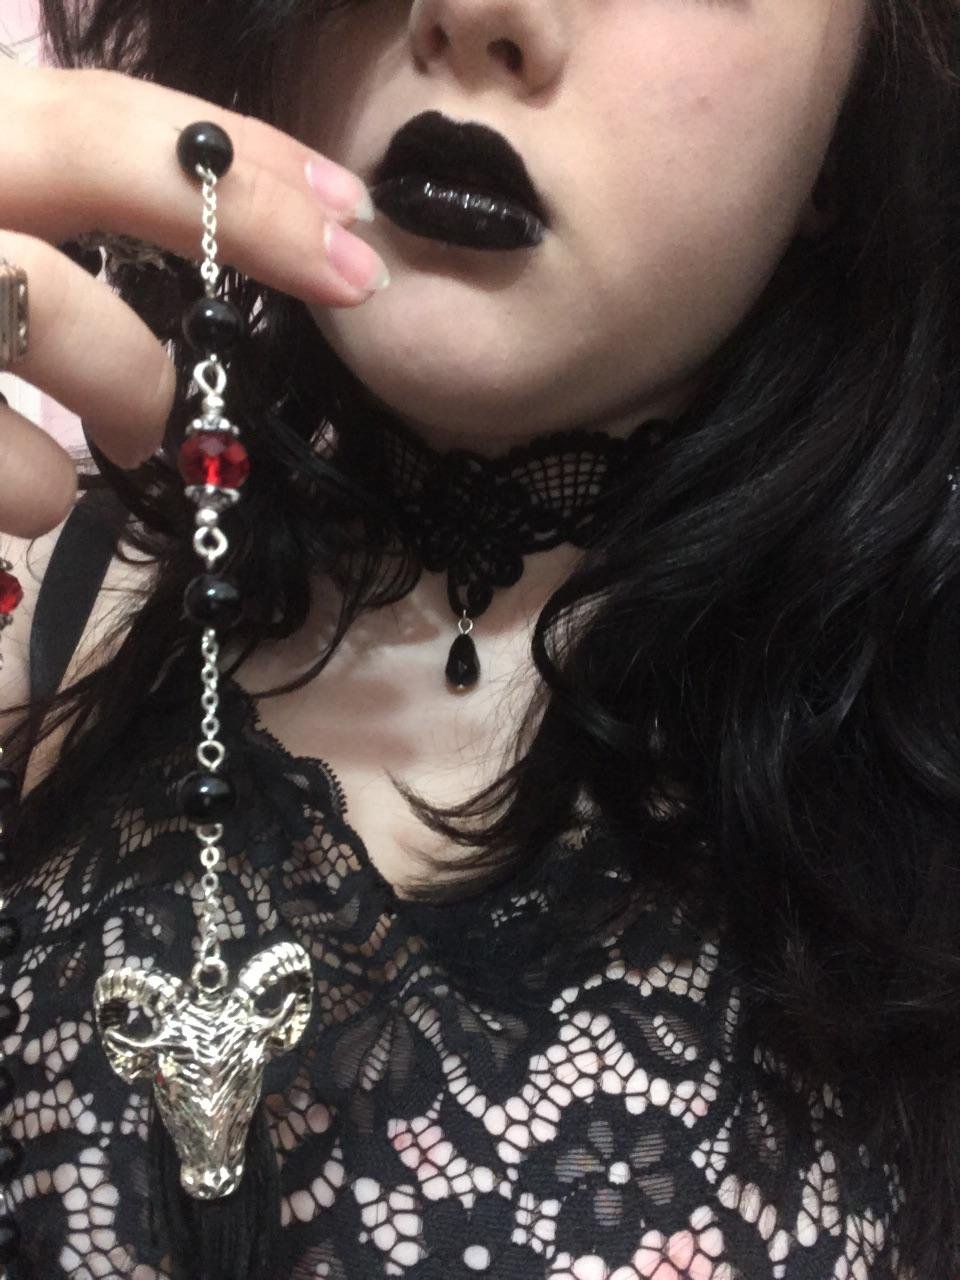 Lips like leather, satanic rosary, 80s goth music playing...